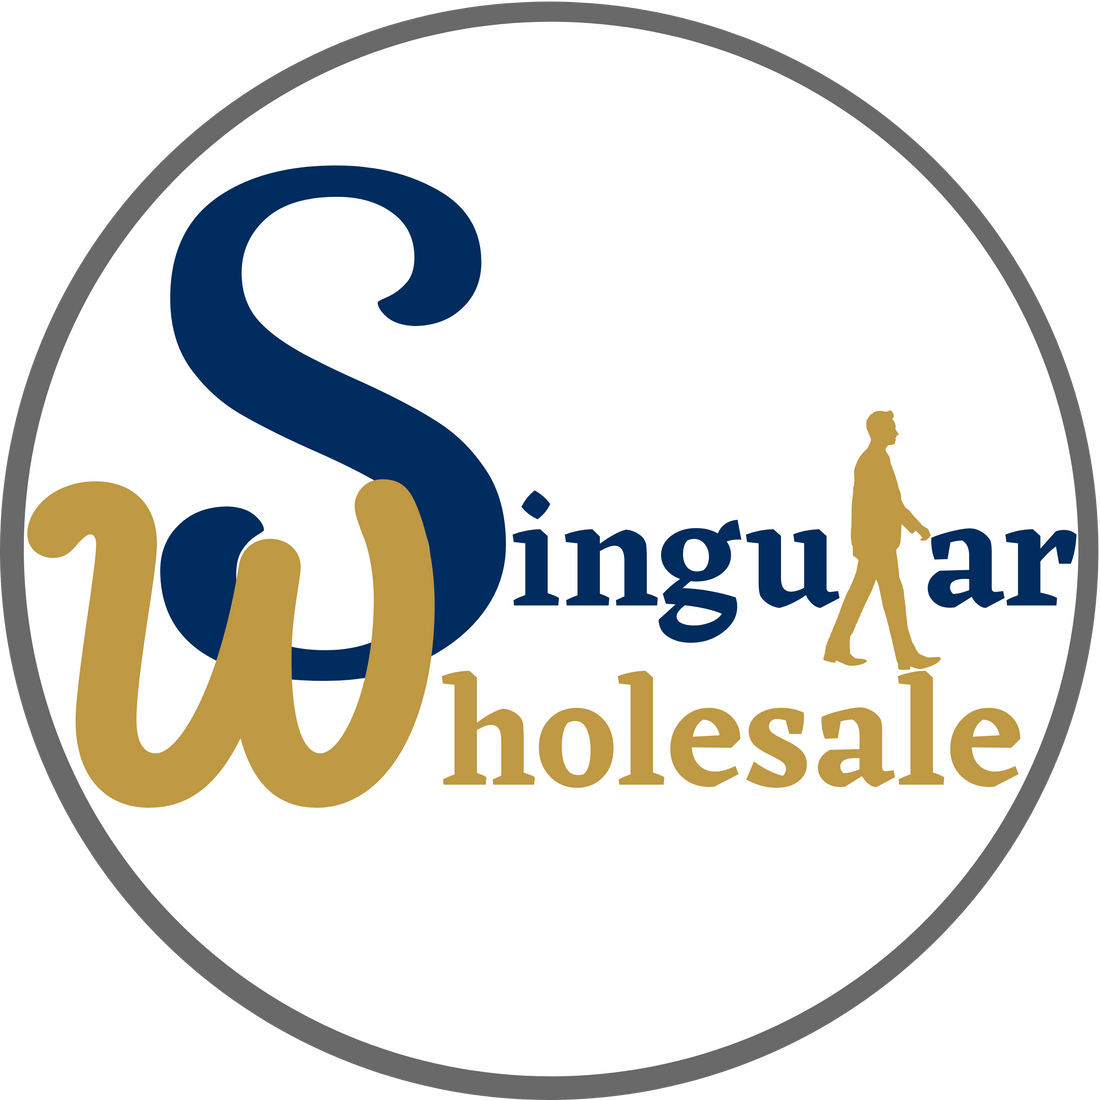 Singular Wholesale